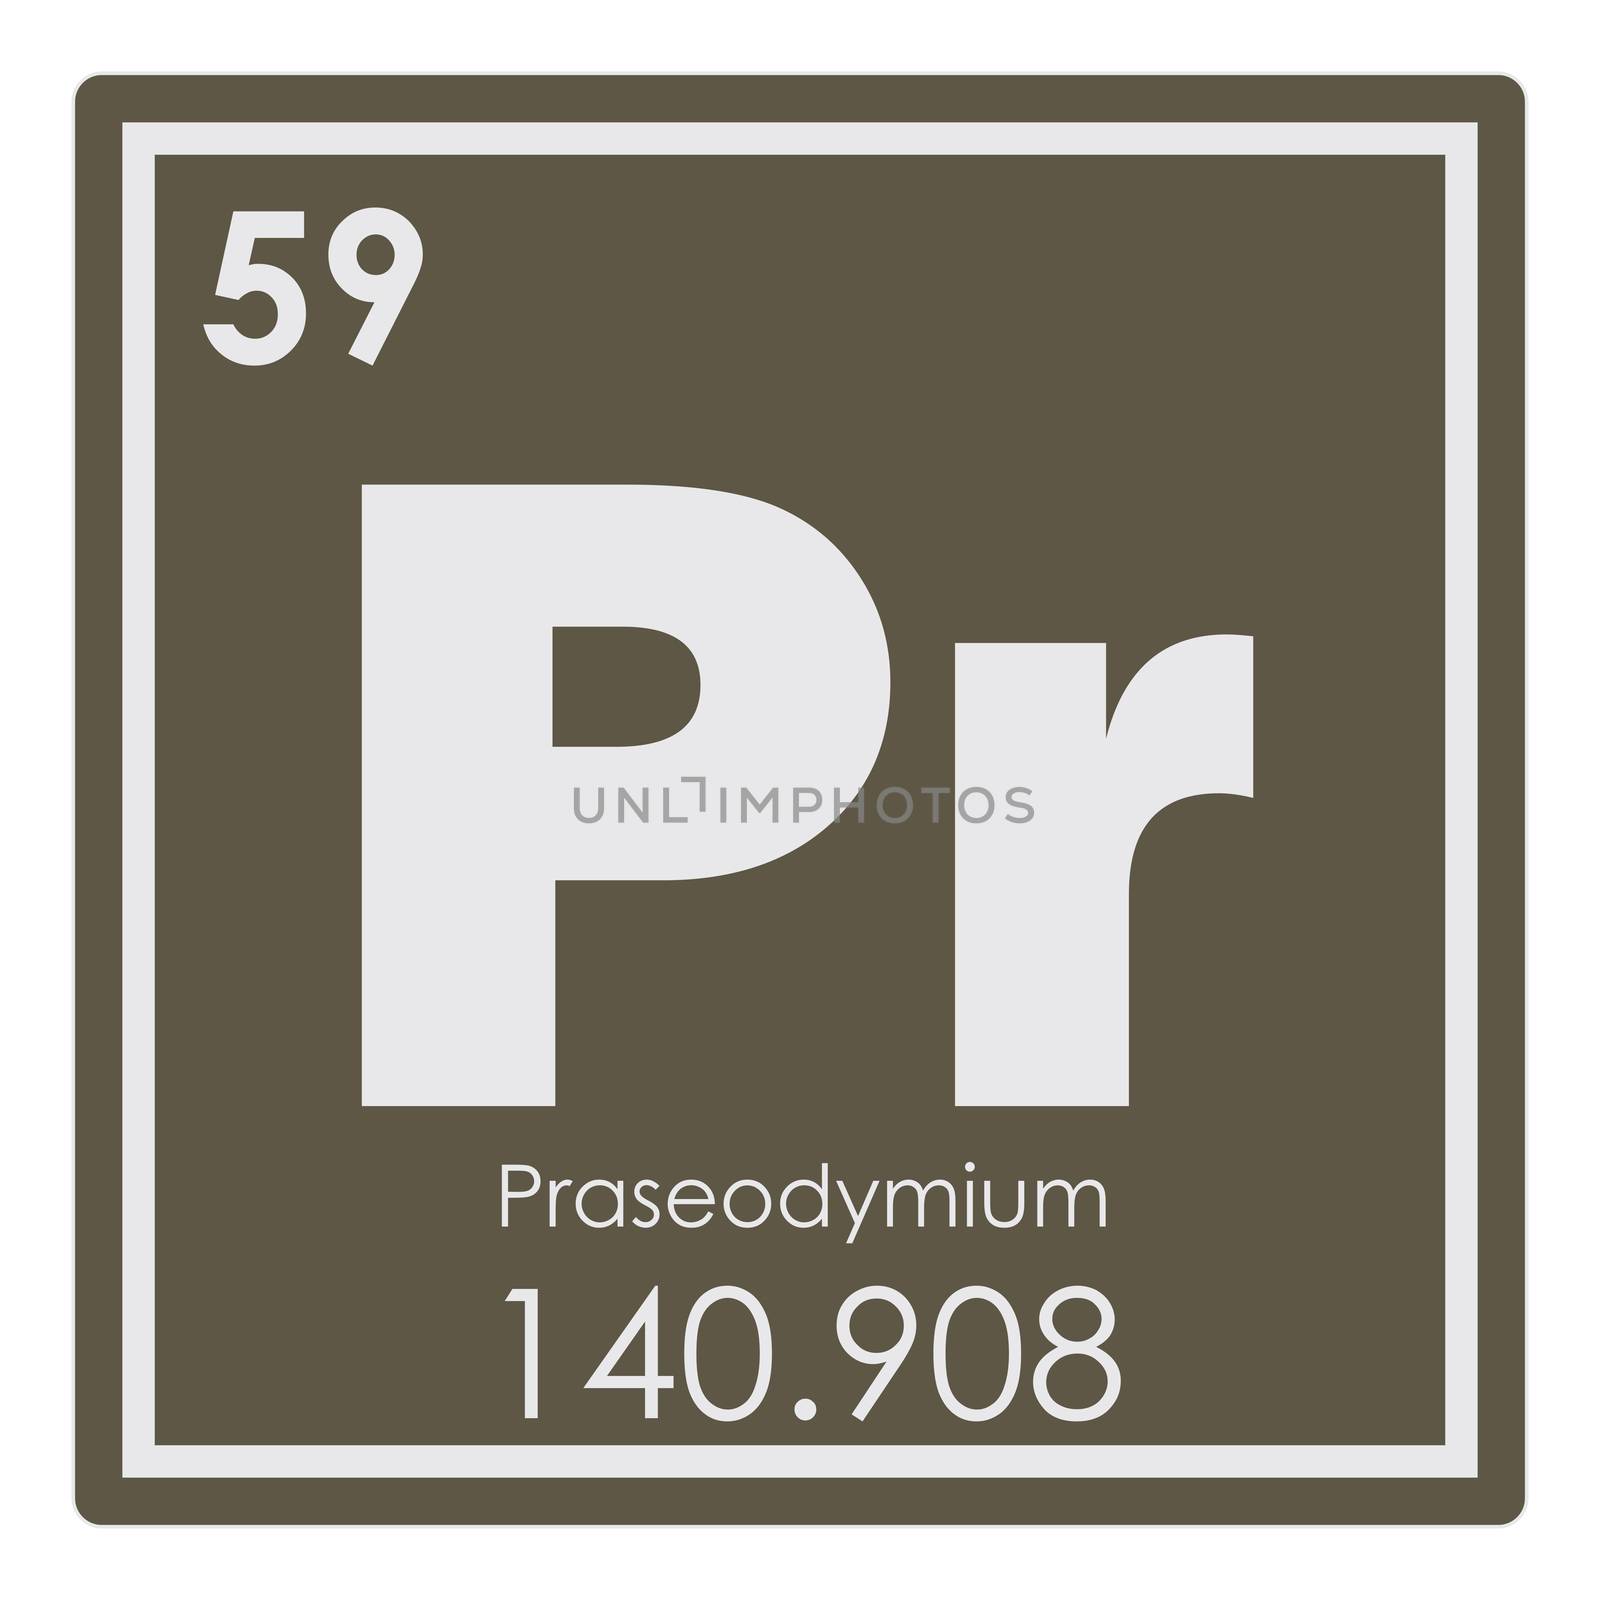 Praseodymium chemical element by tony4urban